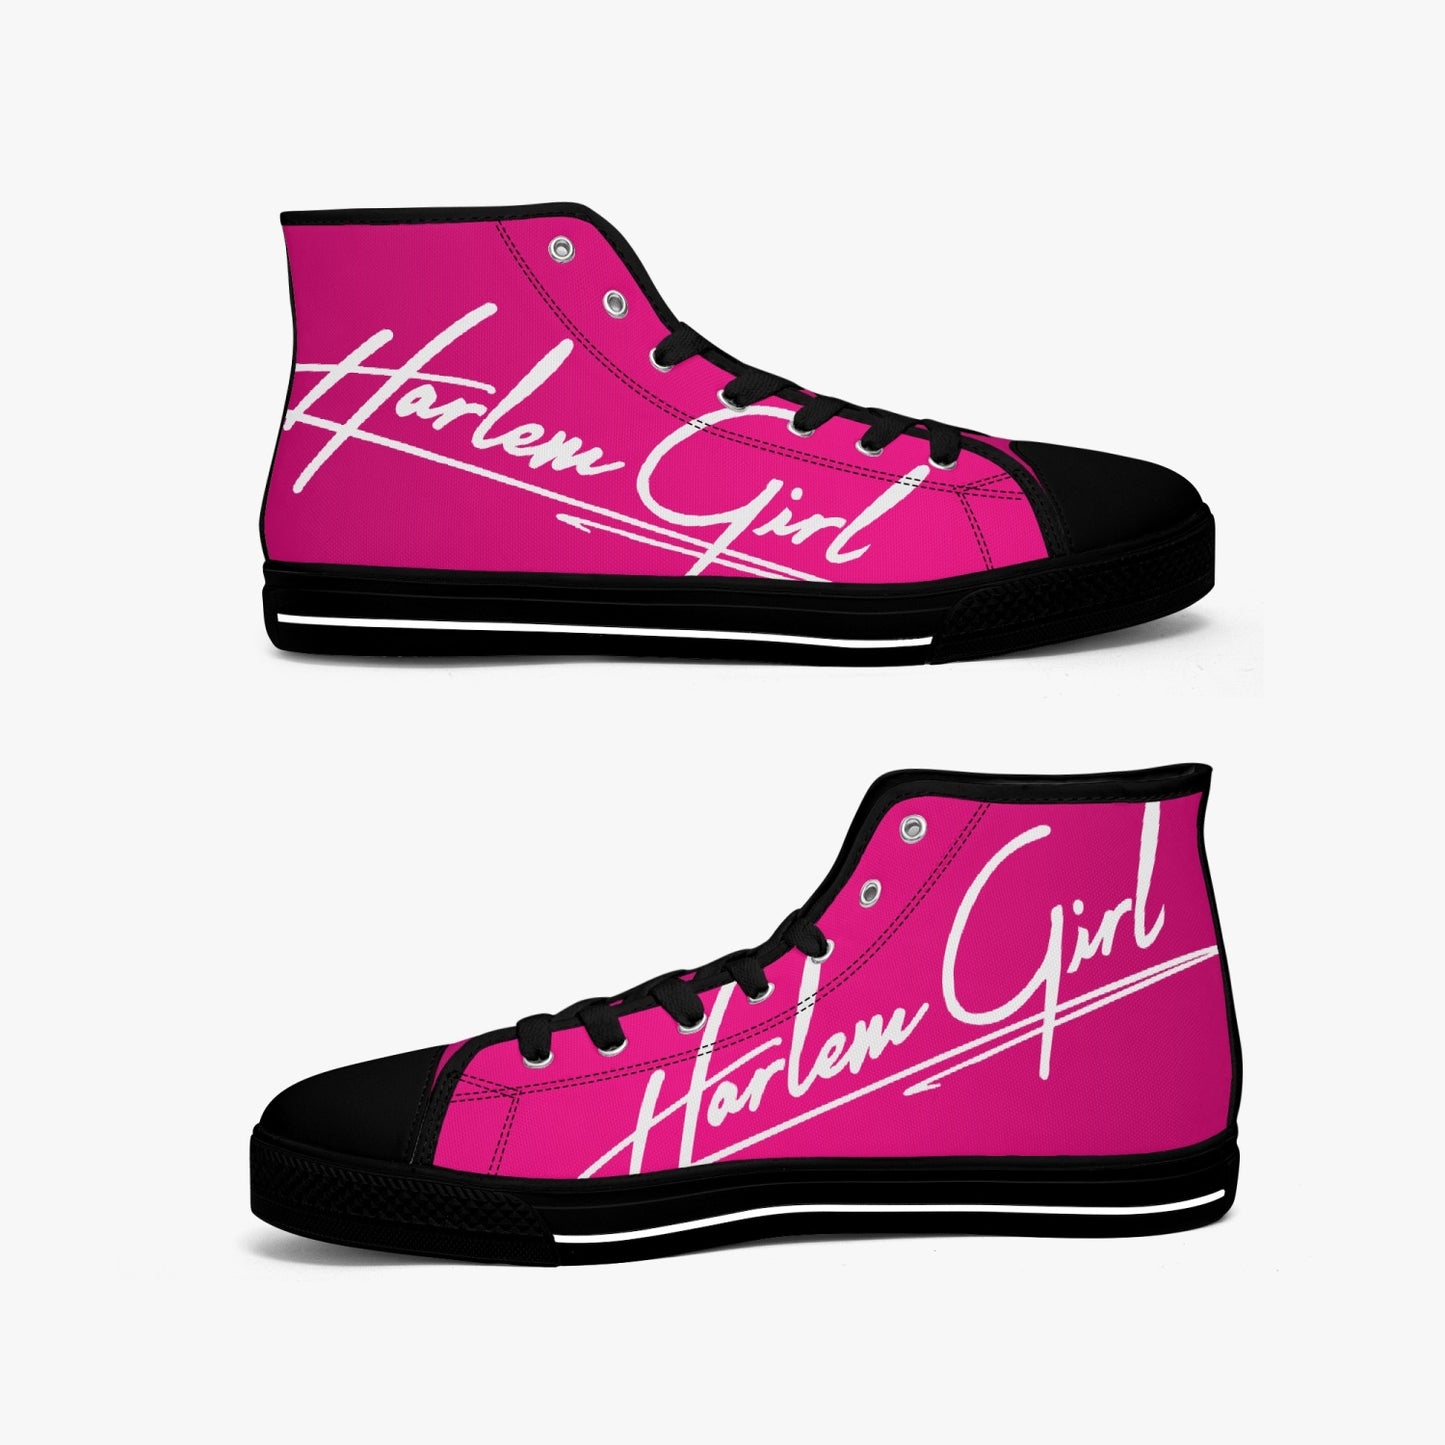 HB Harlem Girl "Lenox Ave" Classic High Top - Fuchsia - Women (Black or White Soles)